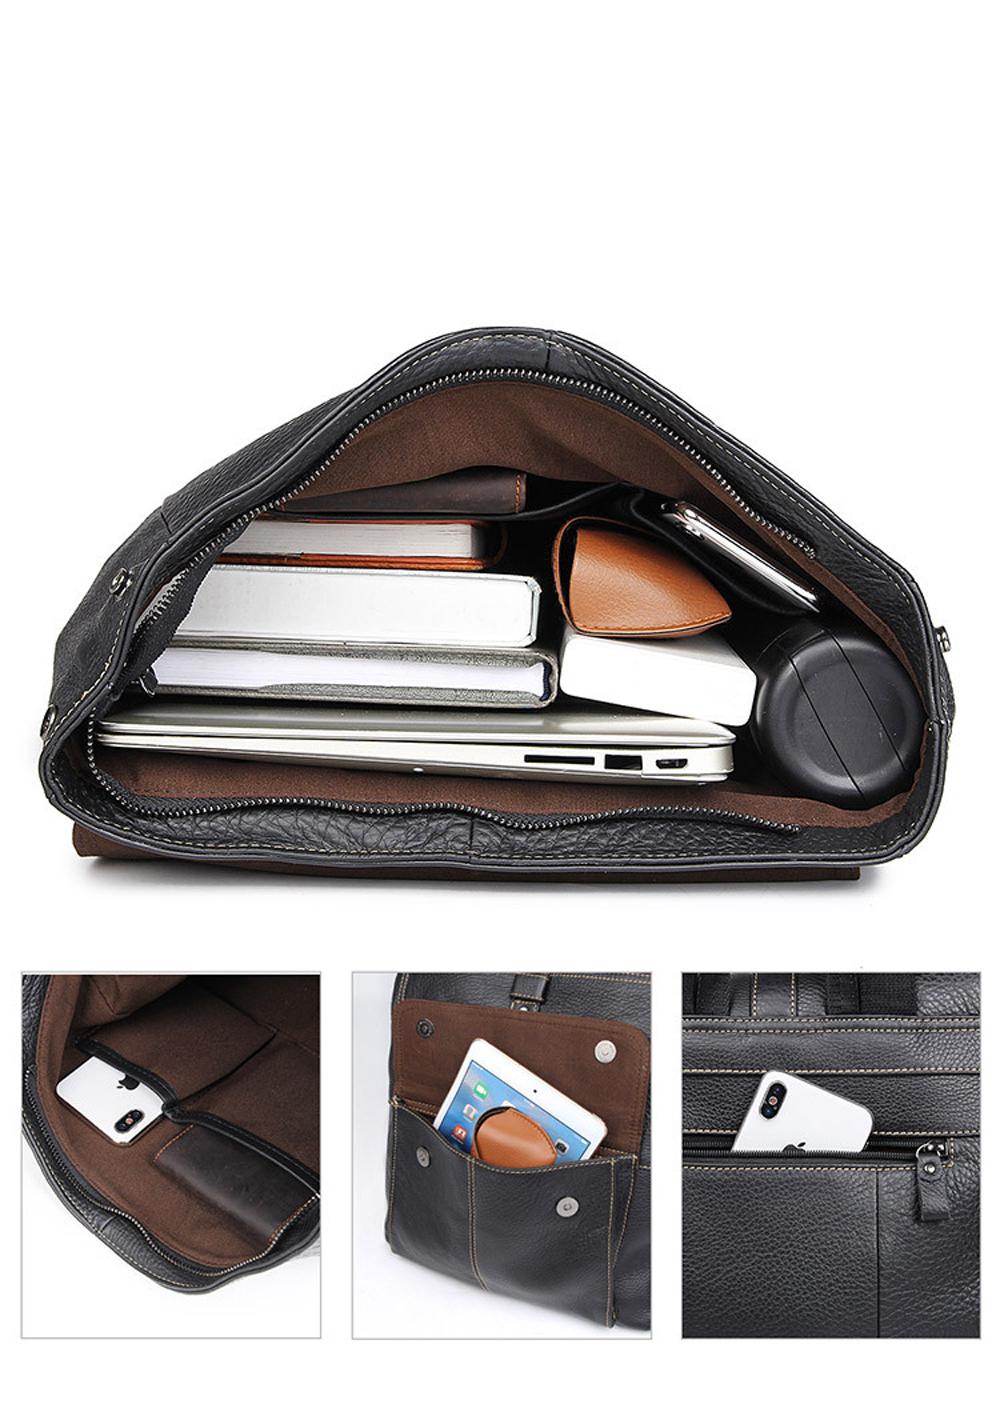 Fashion design Cowhide Casual backpack Custom Leather 15 inch Laptop backpack Man  backpack bag